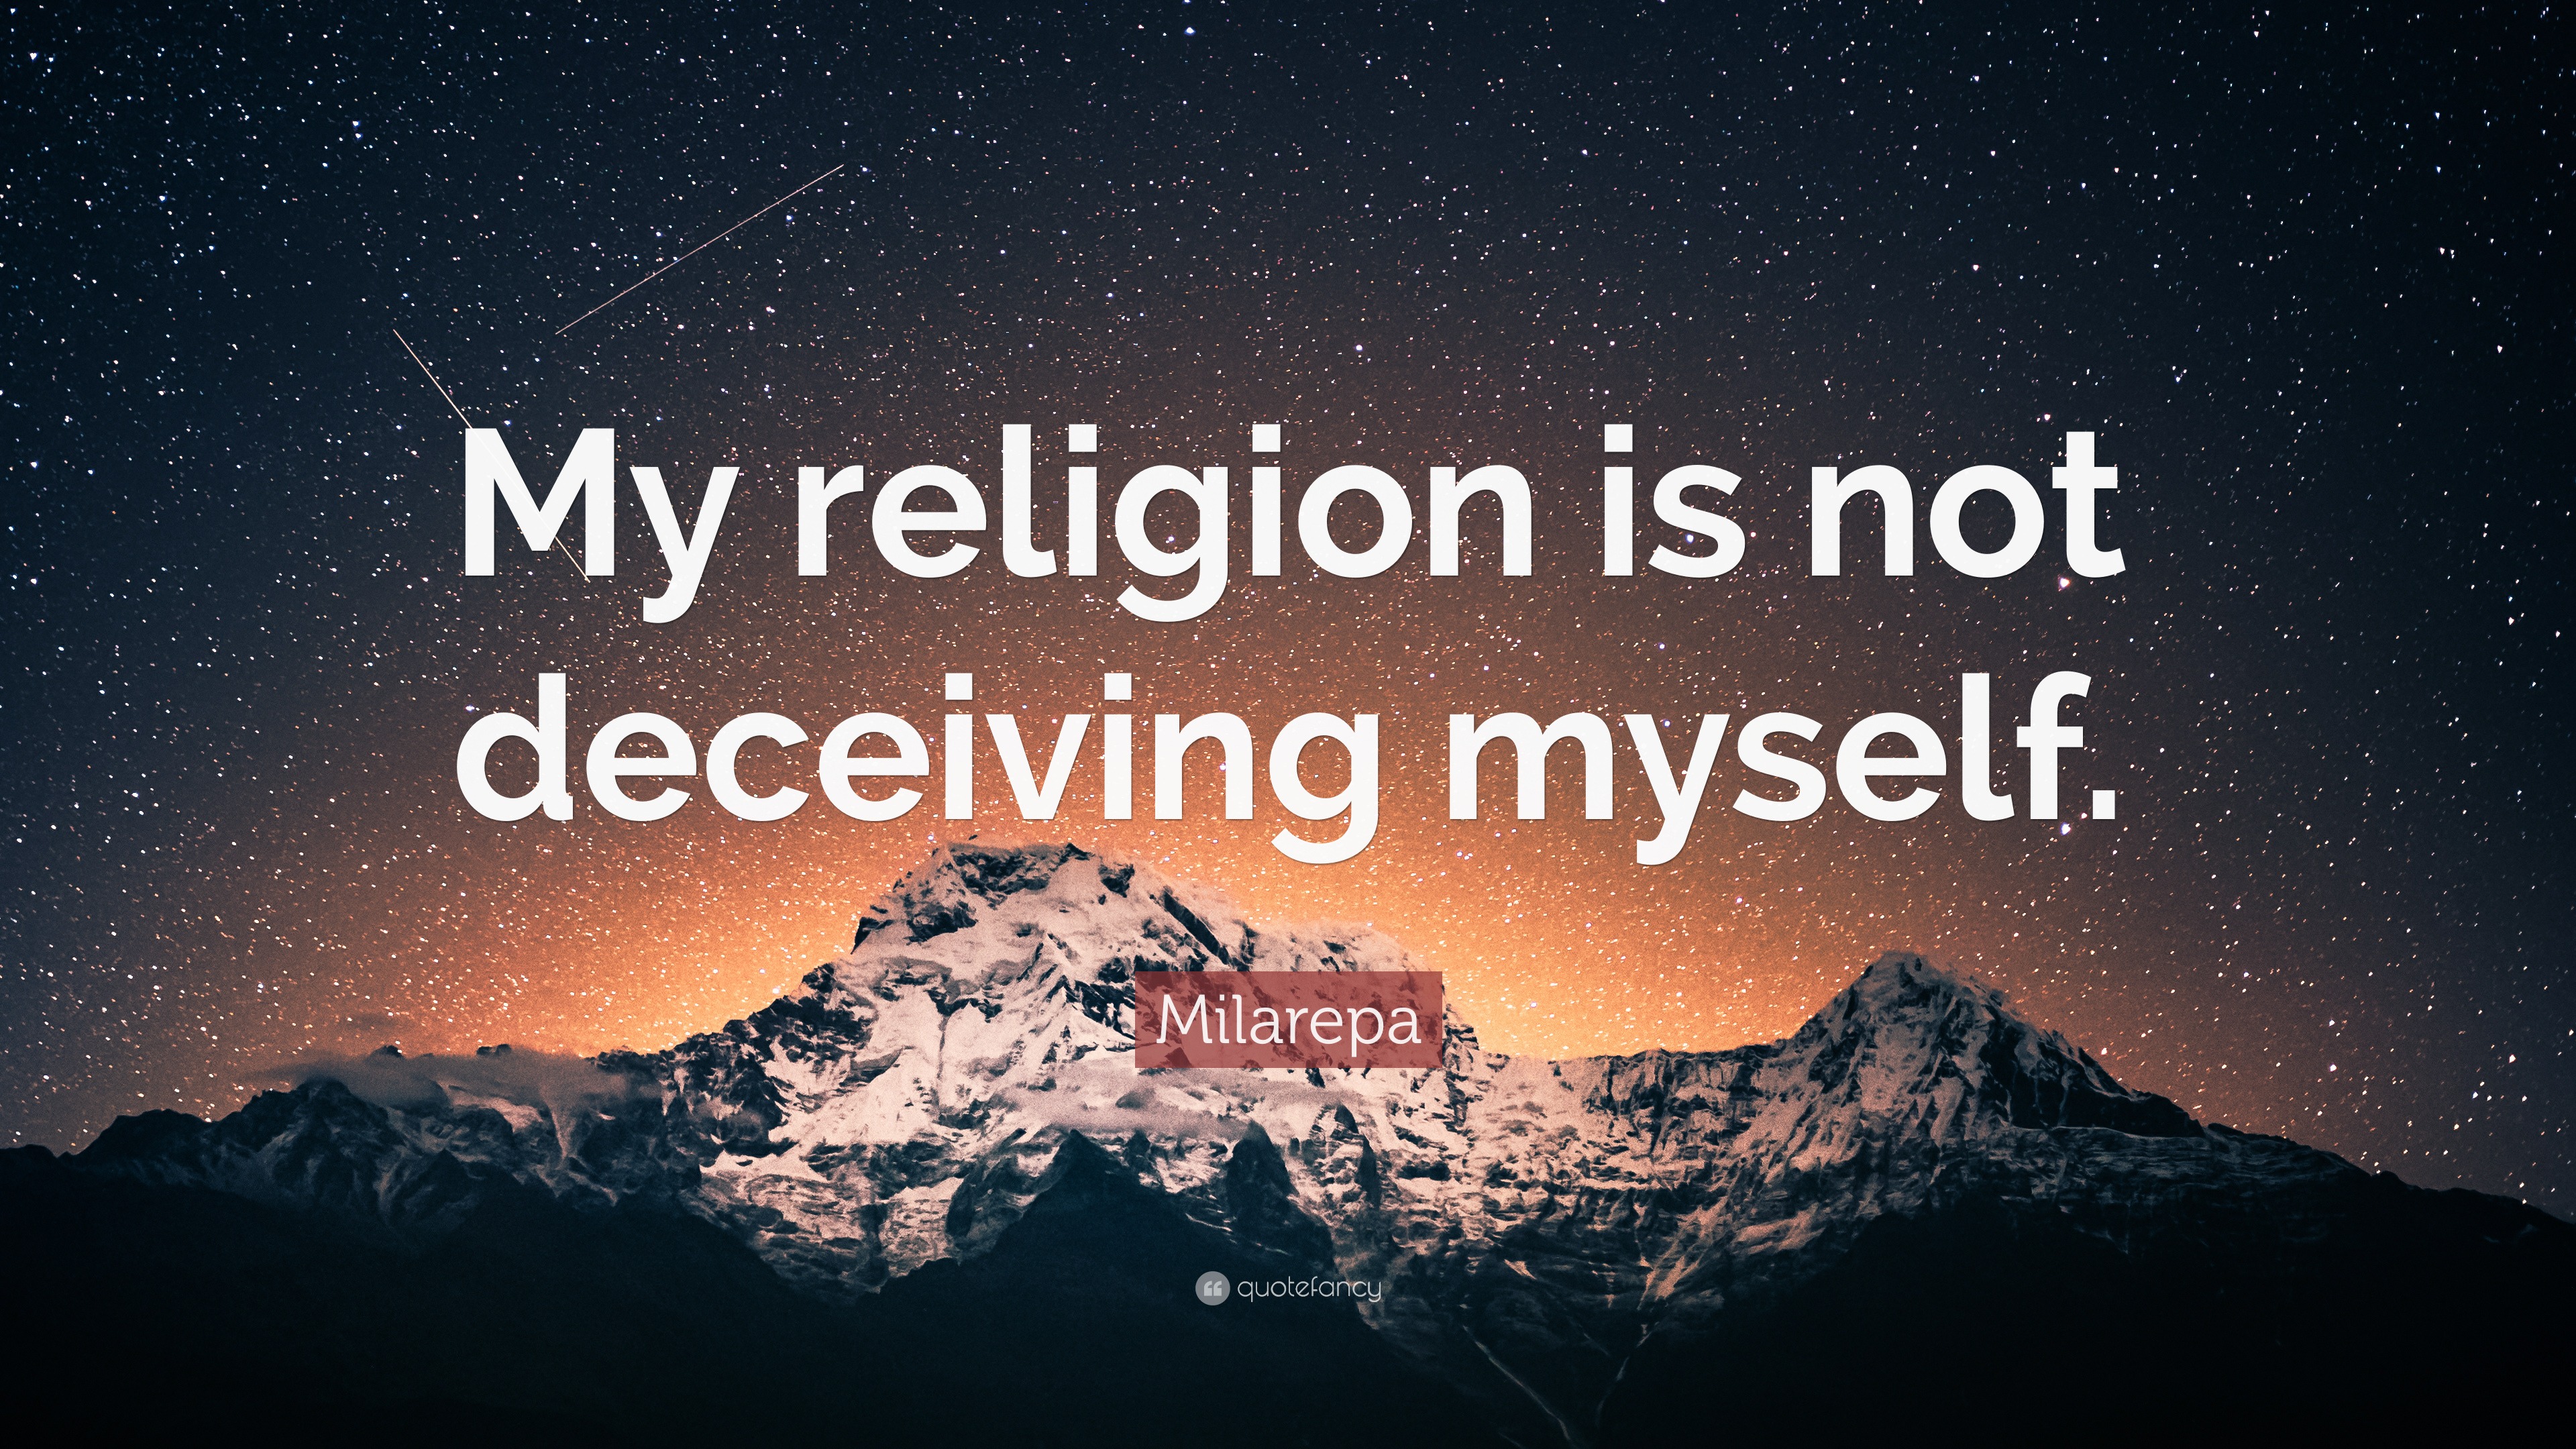 Milarepa Quote “My religion is not deceiving myself.”